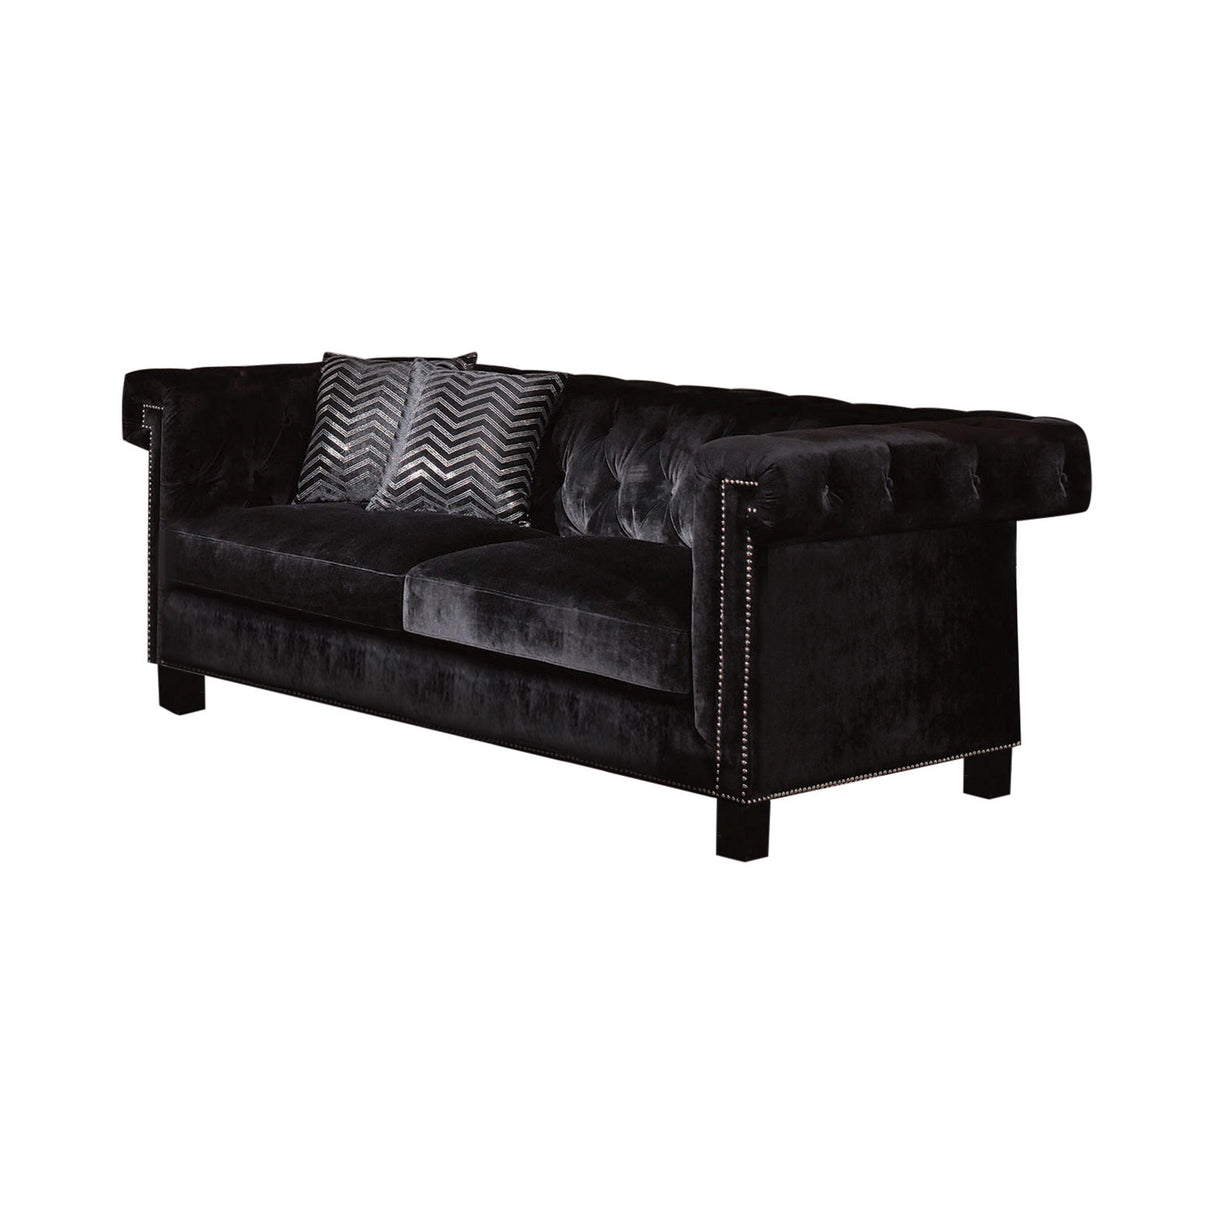 Reventlow Living Room Set in Black by Coaster Furniture Coaster Furniture